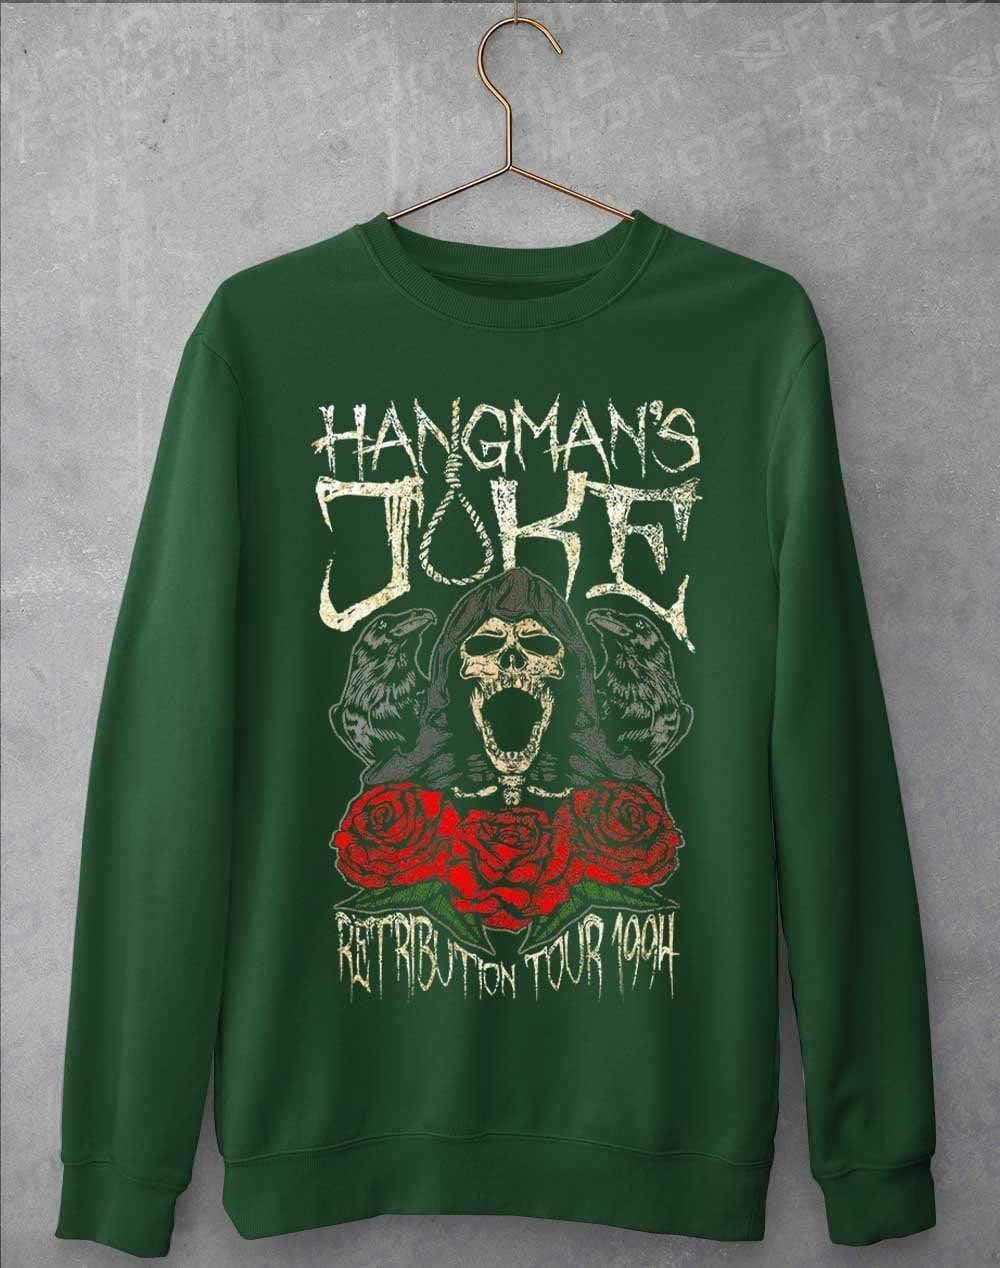 Hangman's Joke Retribution Tour 94 Sweatshirt S / Bottle Green  - Off World Tees